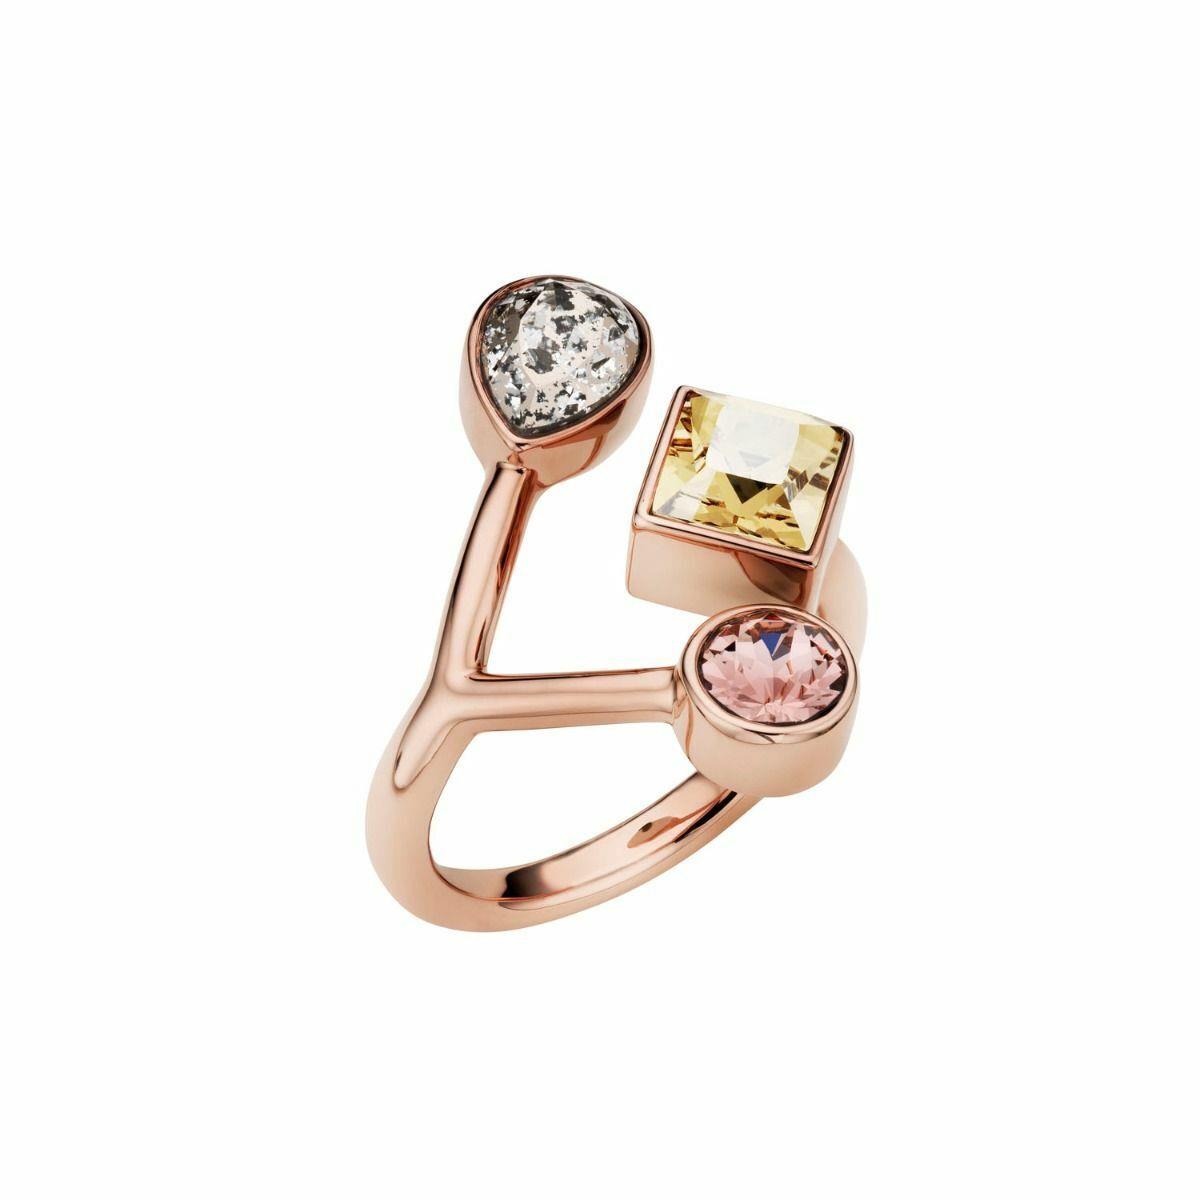 NIB$169 Atelier Swarovski Peter Pilotto Arbol Small Ring Rose Gold Size 52/55/58